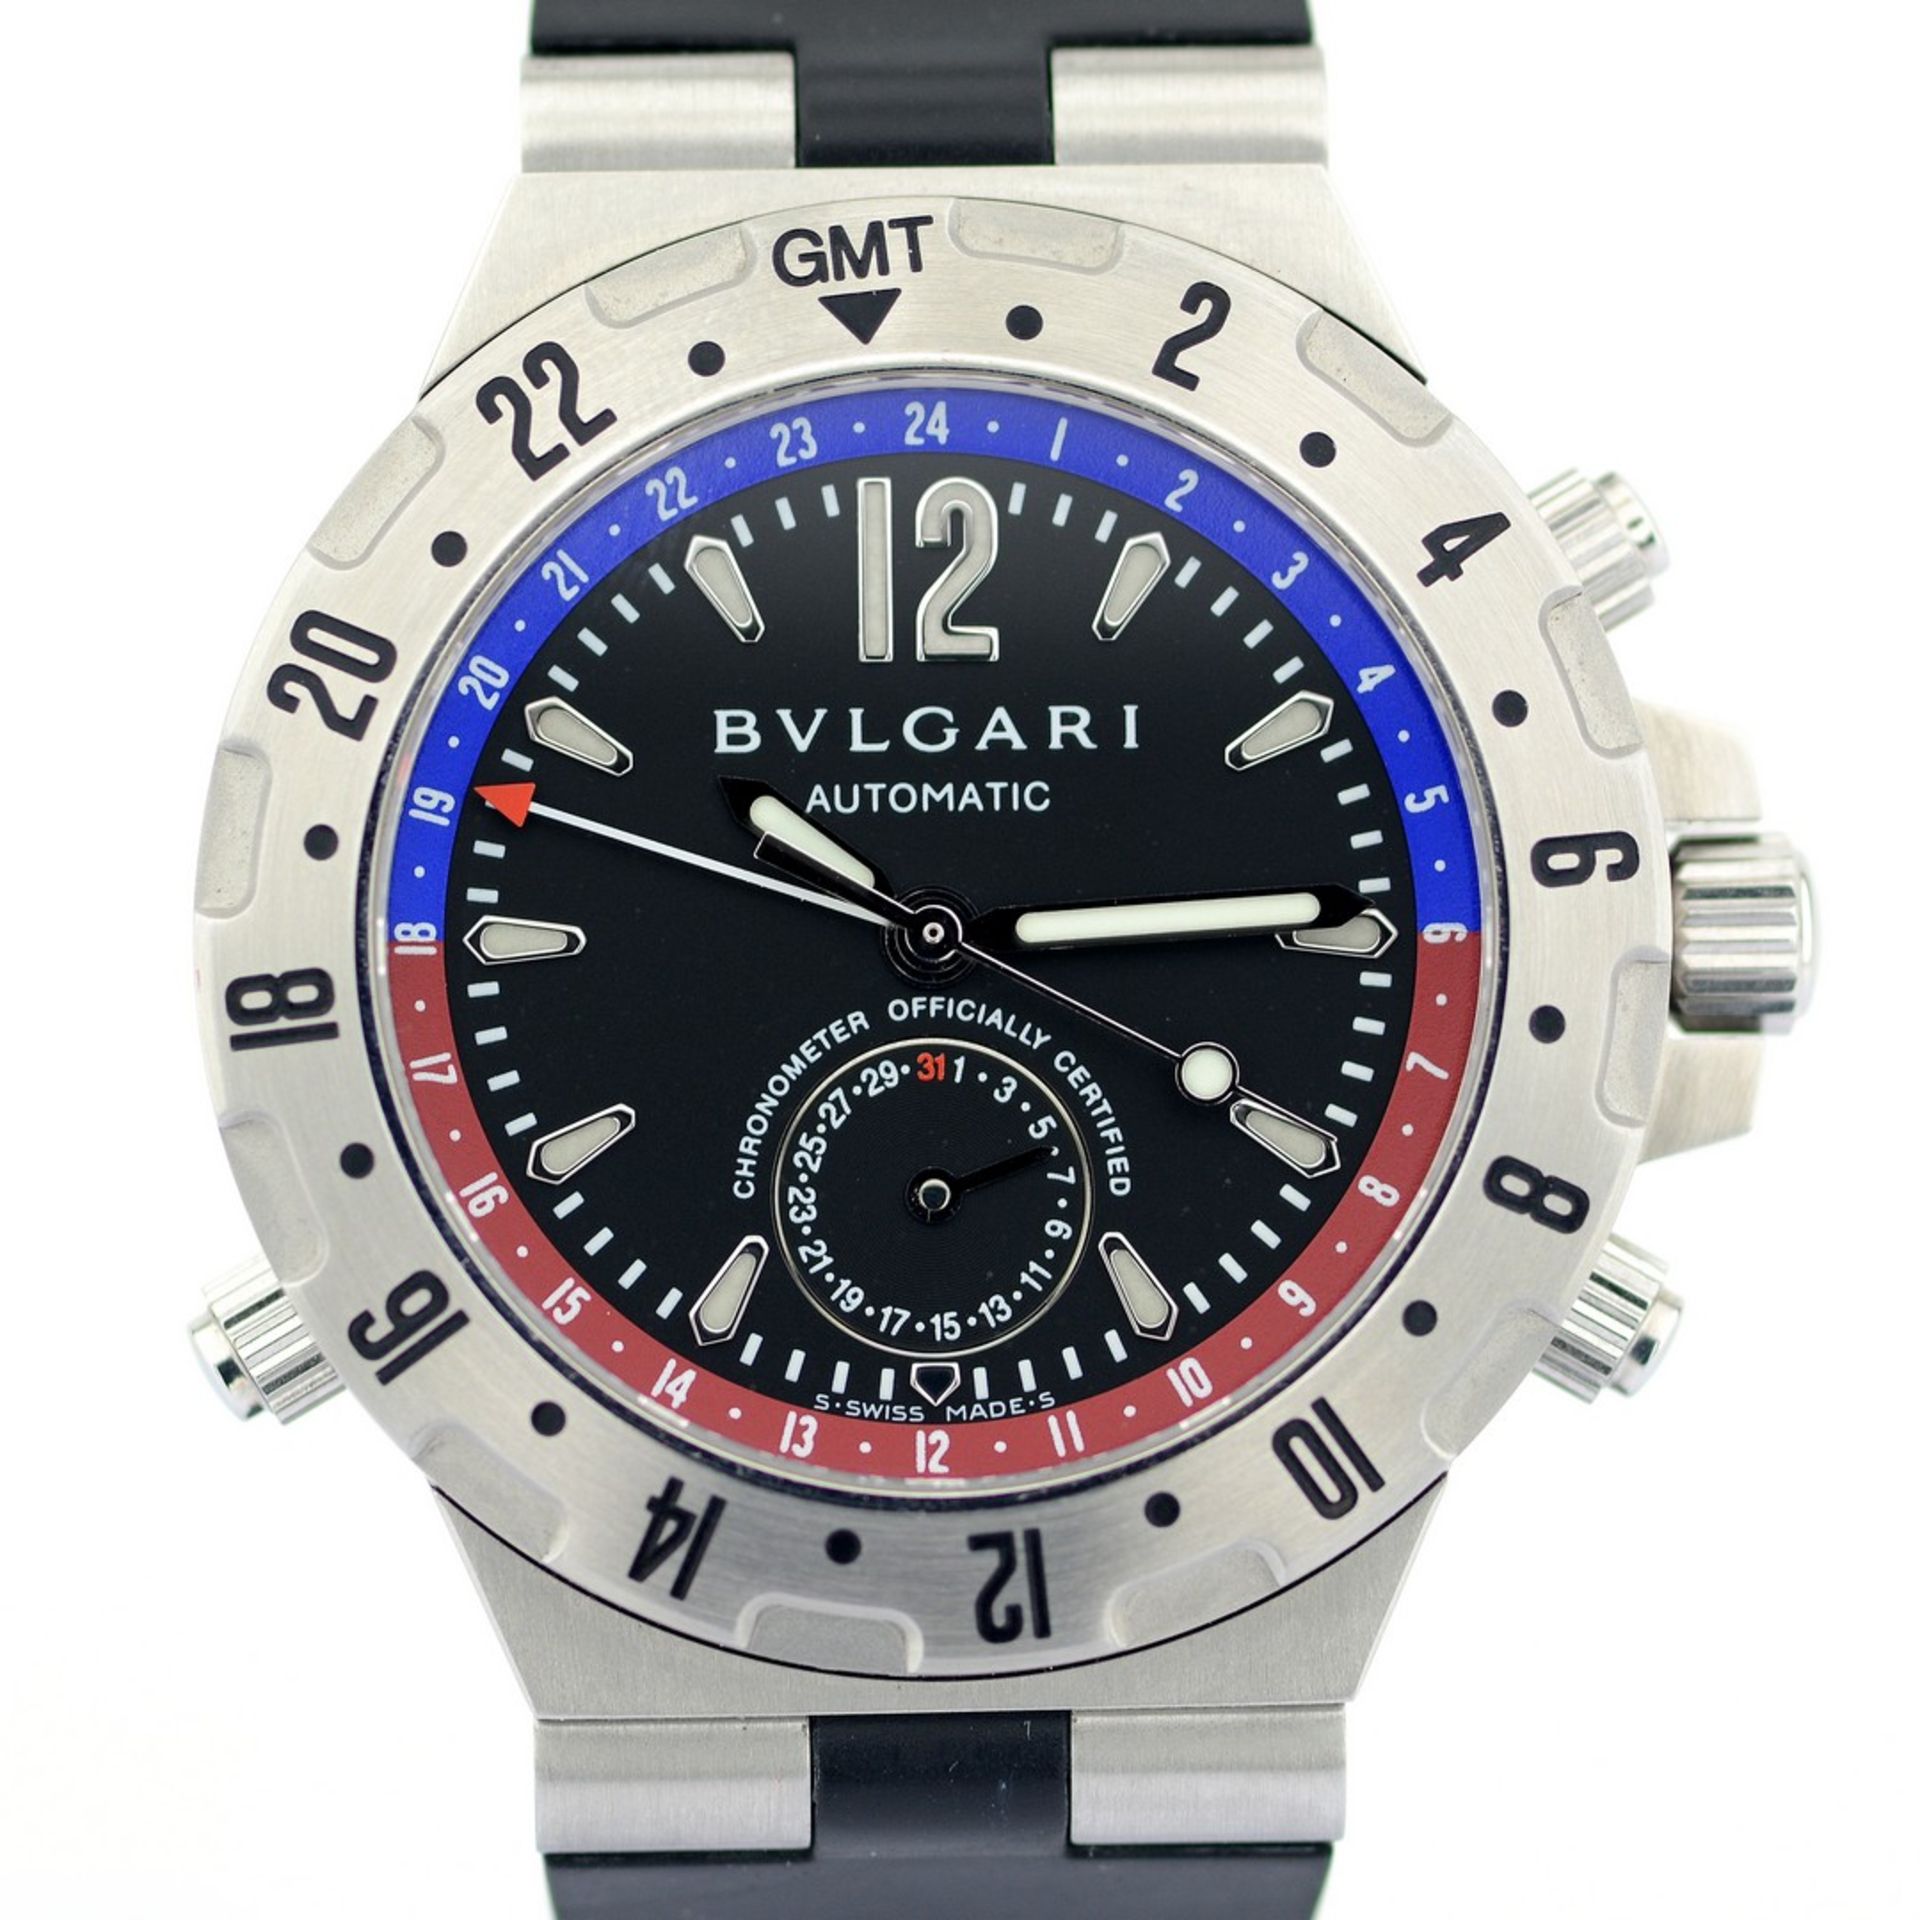 Bulgari / Diagono Professional GMT - Gentlemen's Steel Wrist Watch - Image 3 of 9